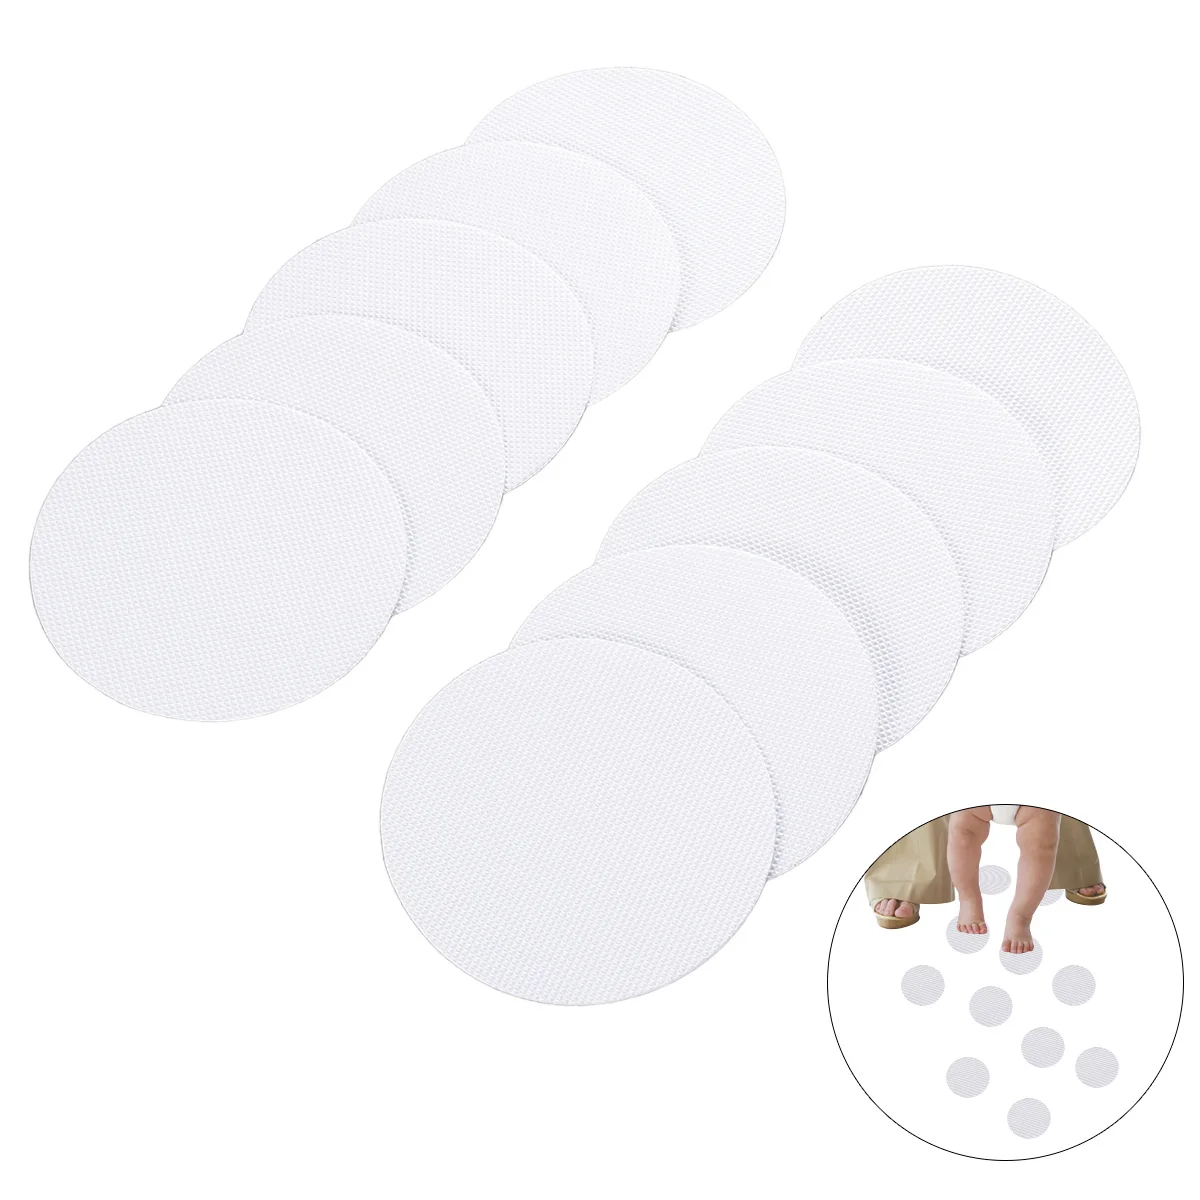 10pcs Anti-Slip Bath Grip Stickers Non-Slip Flooring Safety Bath Tub Shower Strips Tape Mat Applique Bathroom Accessories A30 - Цвет: Белый